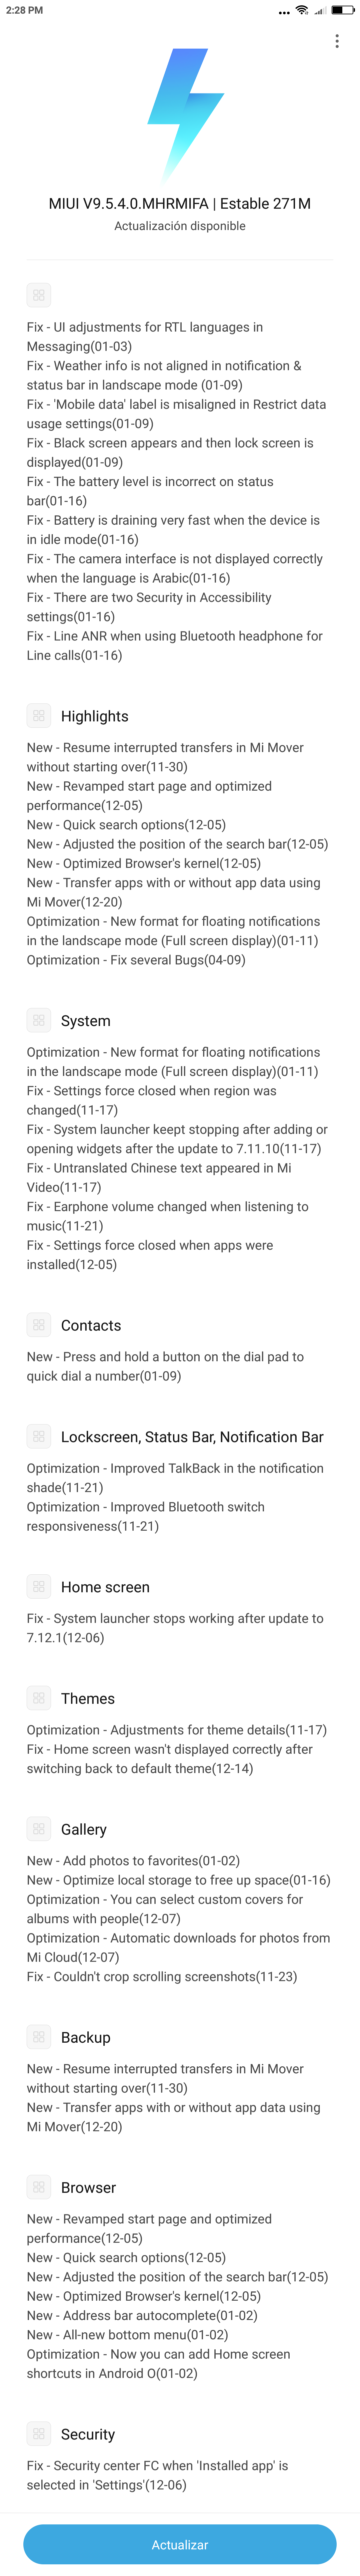 Screenshot_2018-04-16-14-28-46-477_com.android.updater.png